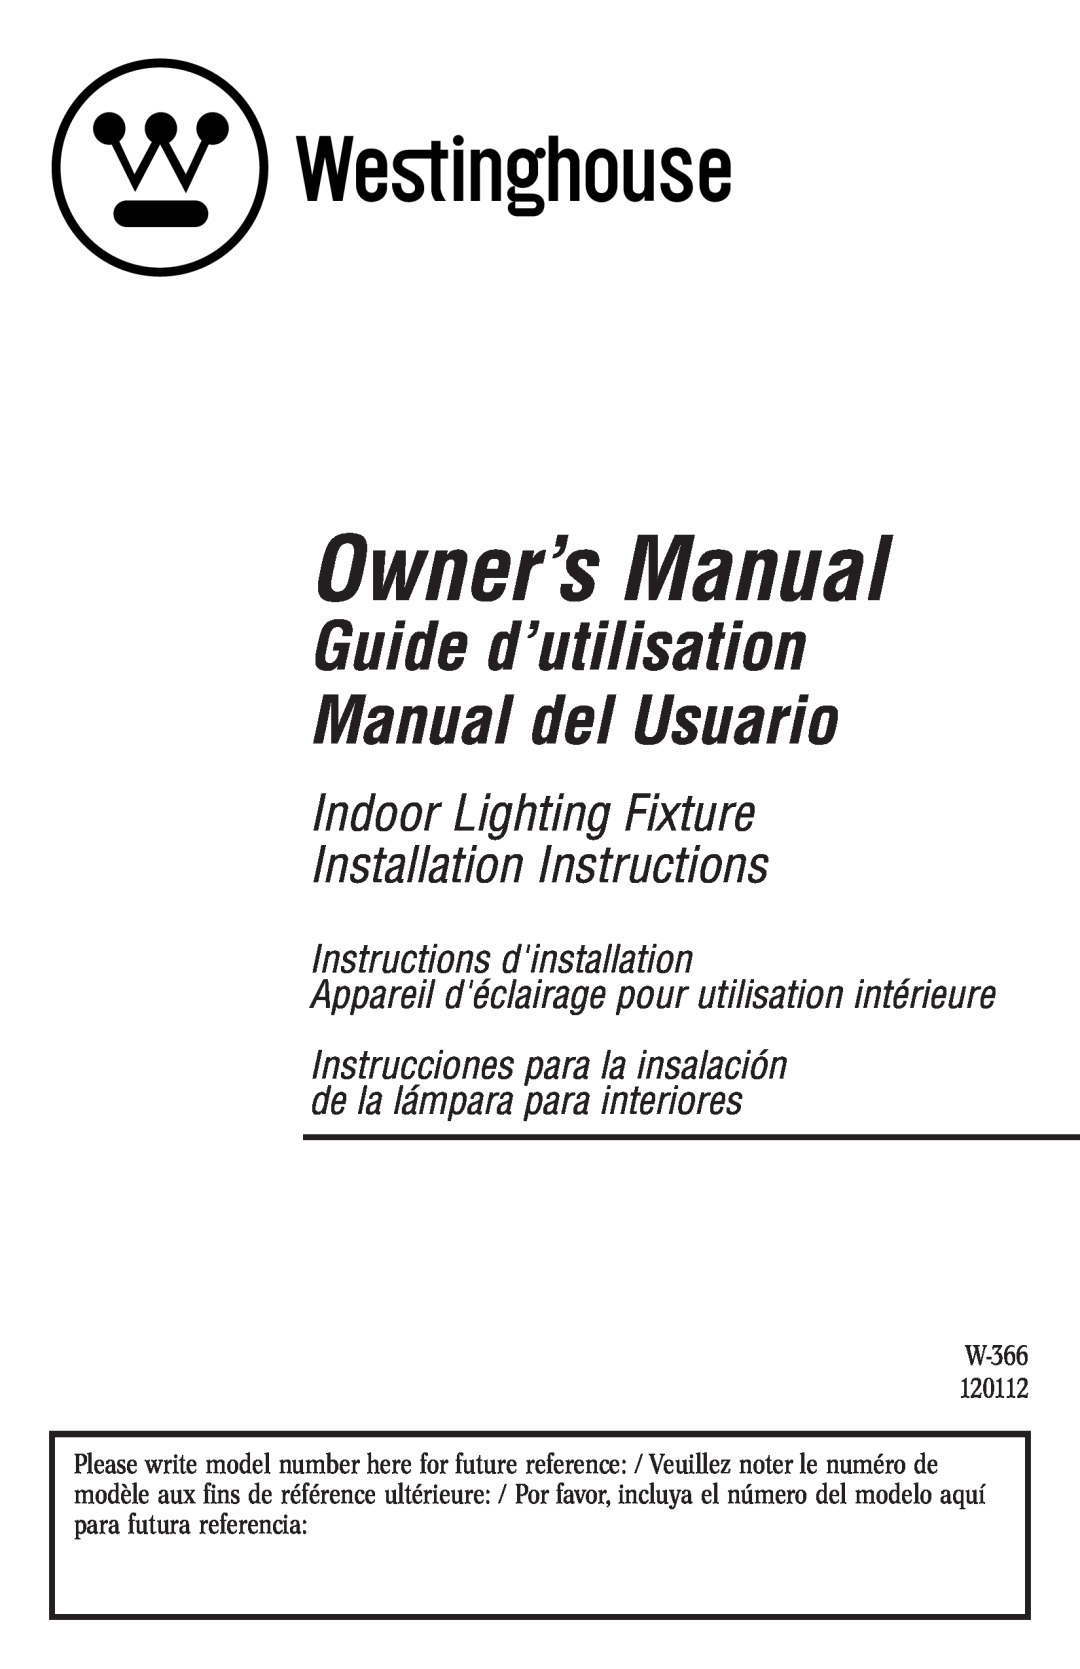 Westinghouse 120112 owner manual Guide d’utilisation Manual del Usuario, Indoor Lighting Fixture Installation Instructions 